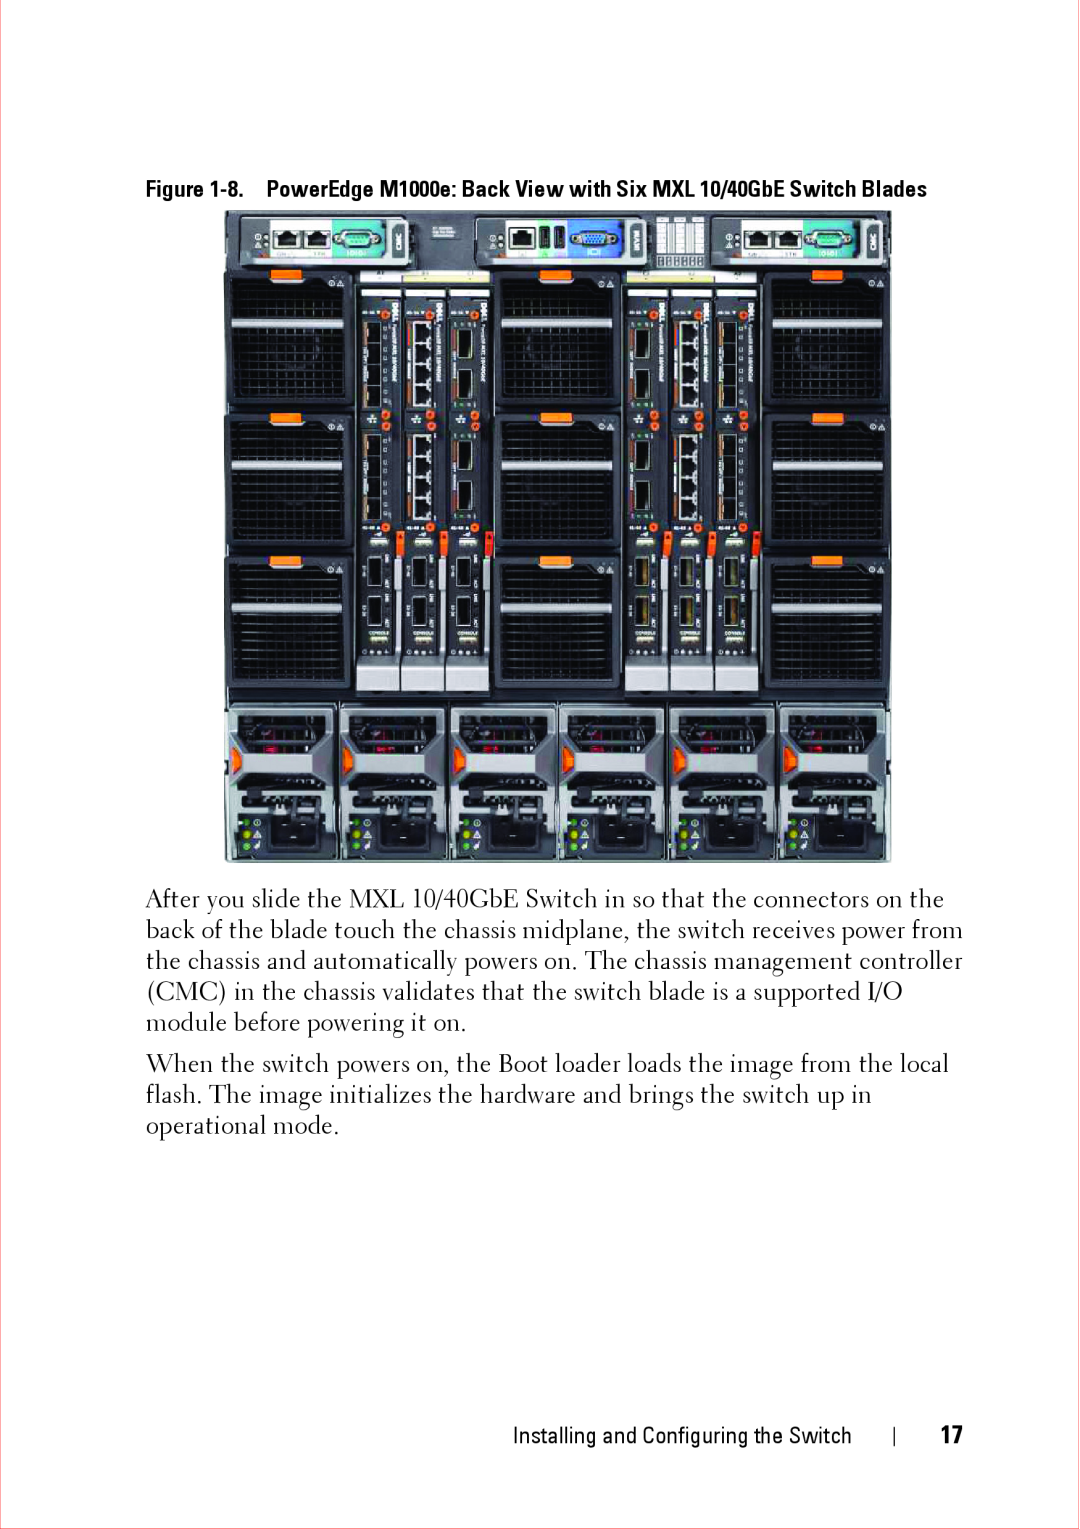 Force10 Networks CC-C-BLNK-LC manual 